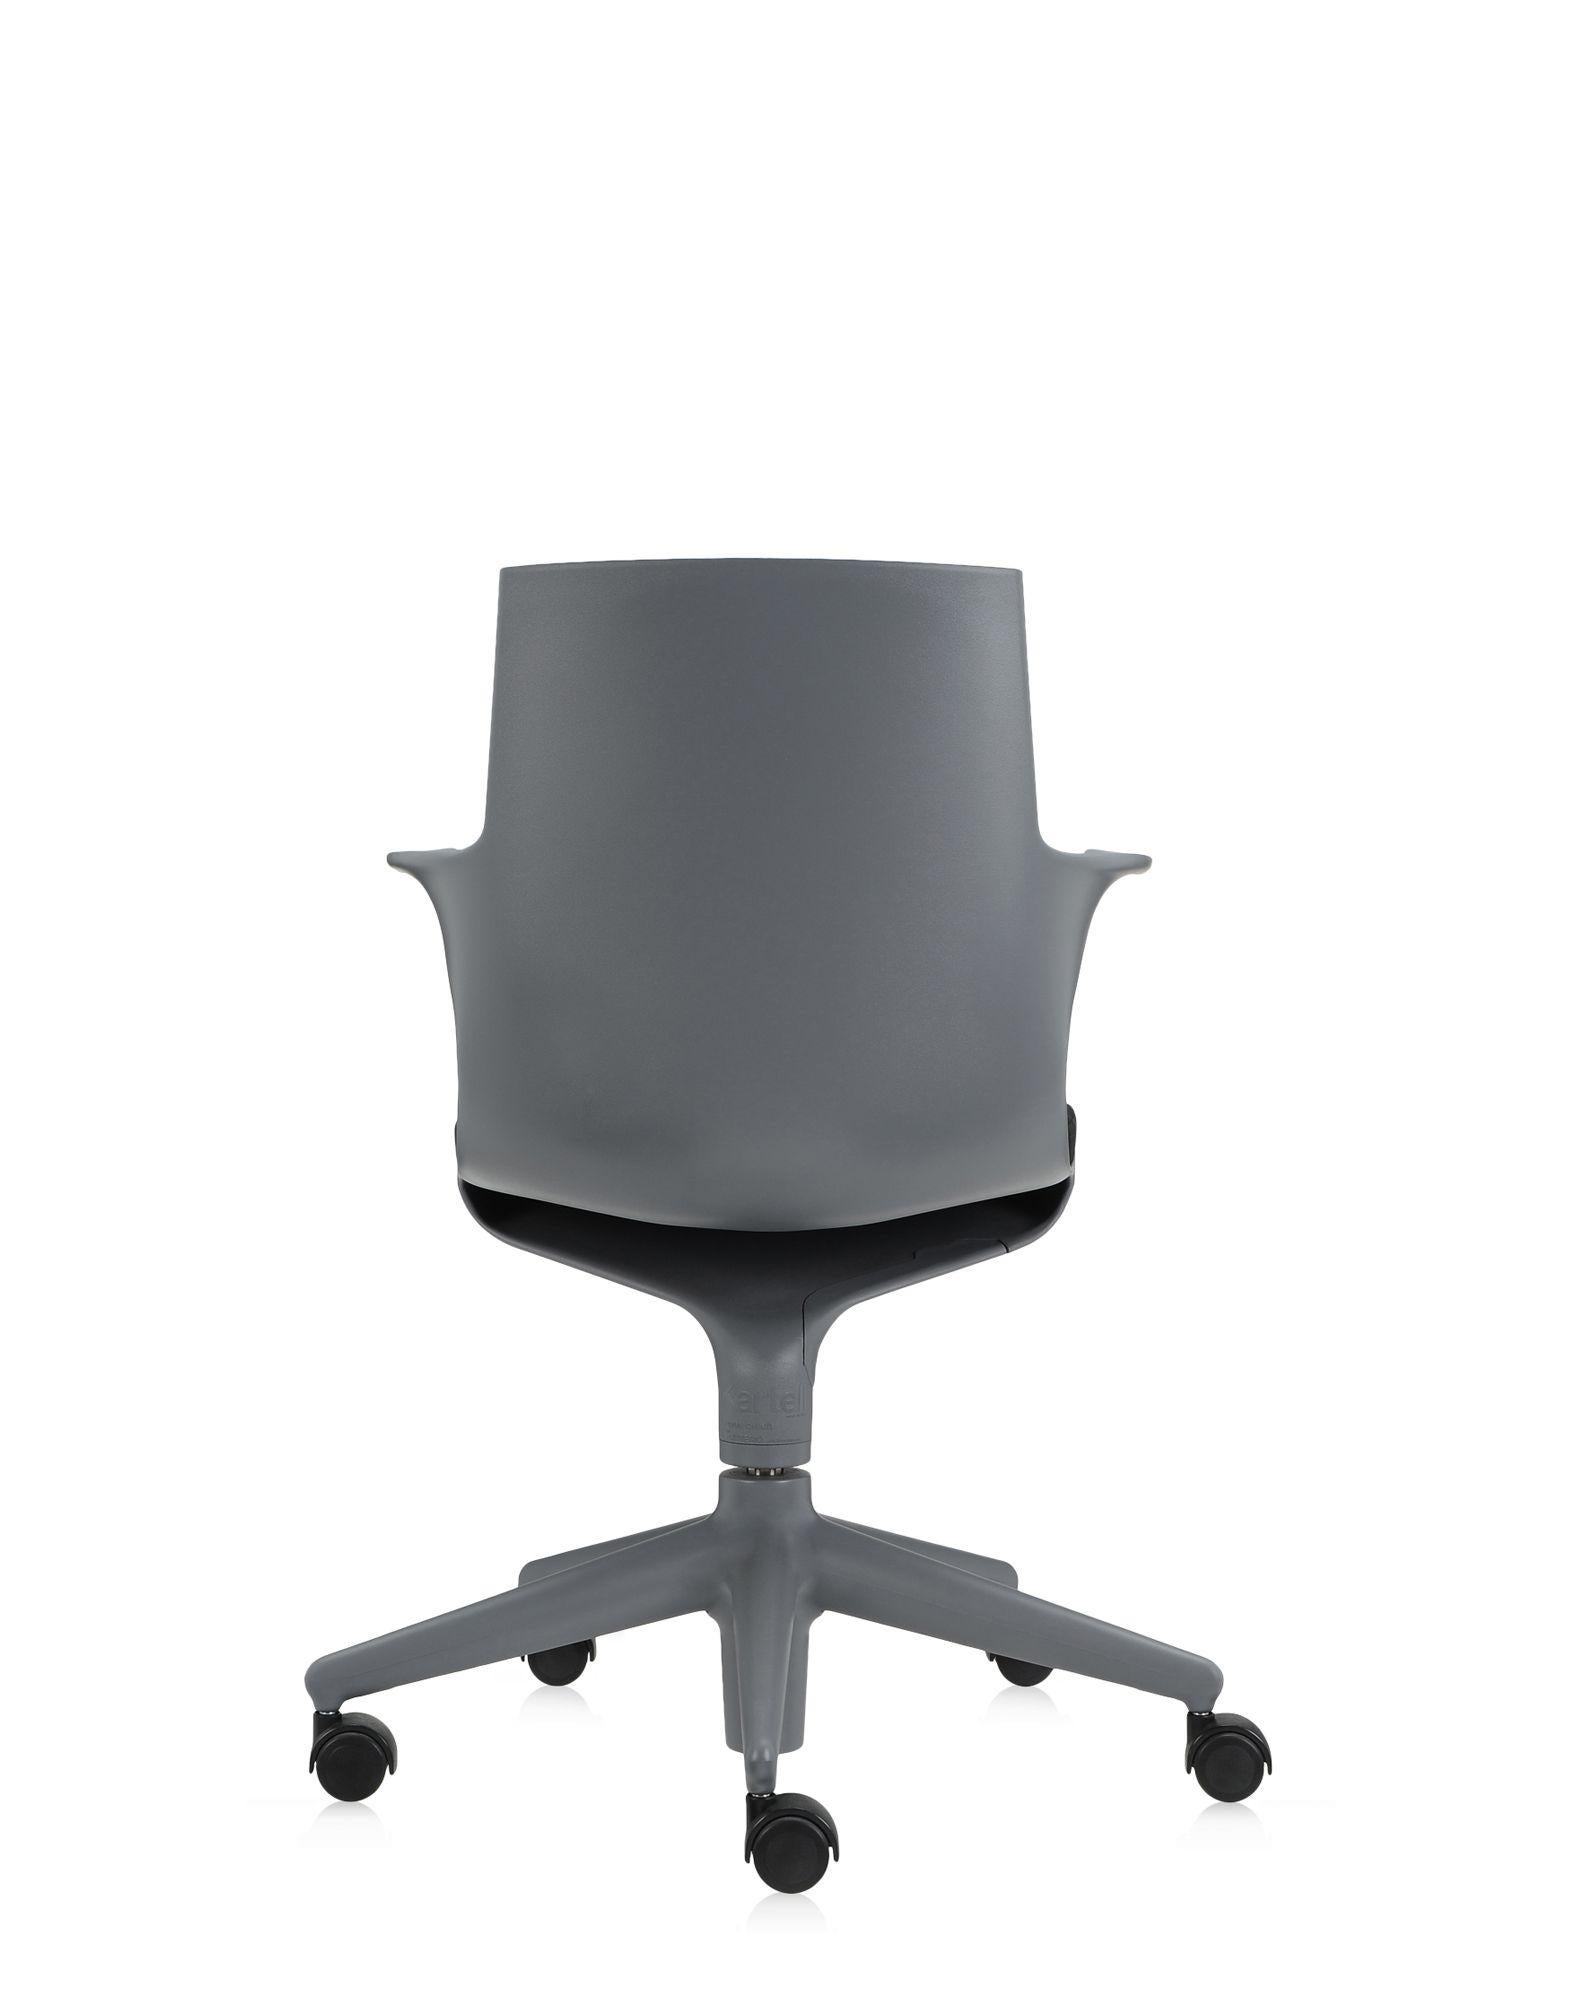 Italian Kartell Spoon Chair in Grey & Black by Antonio Citterio & Toan Nguyen